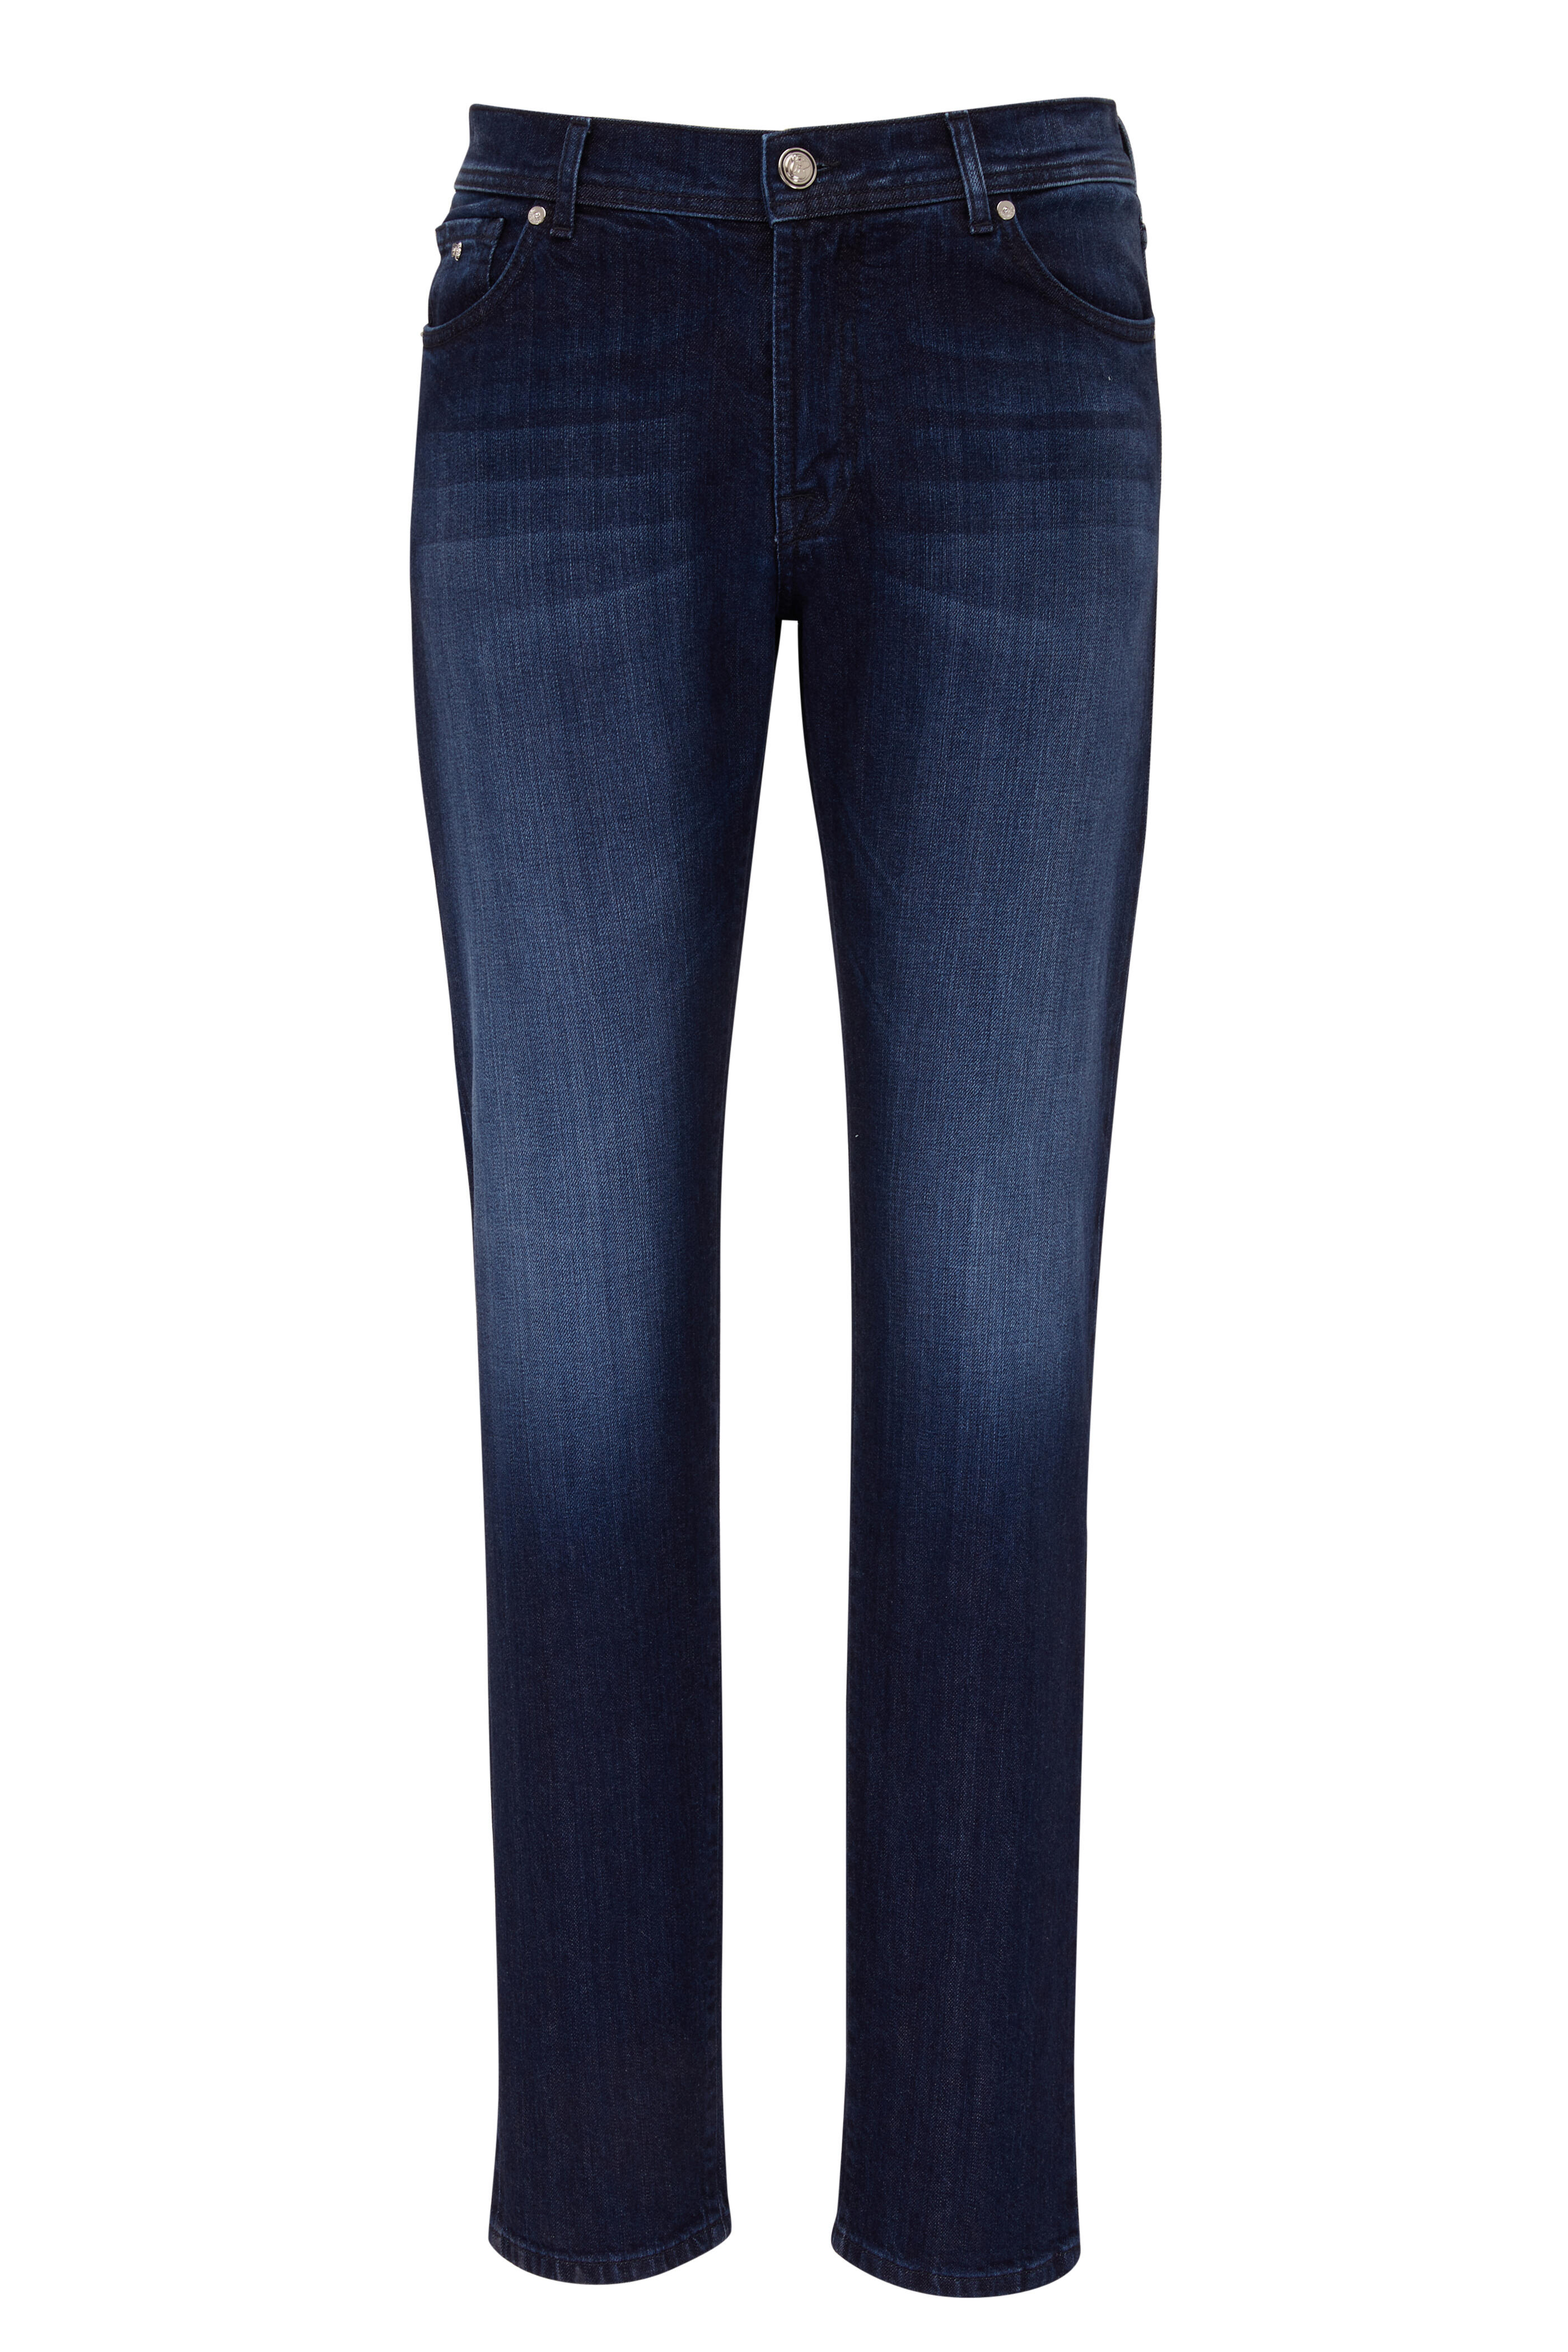 Marco Pescarolo - Vintage Dark Blue Denim Five Pocket Jean